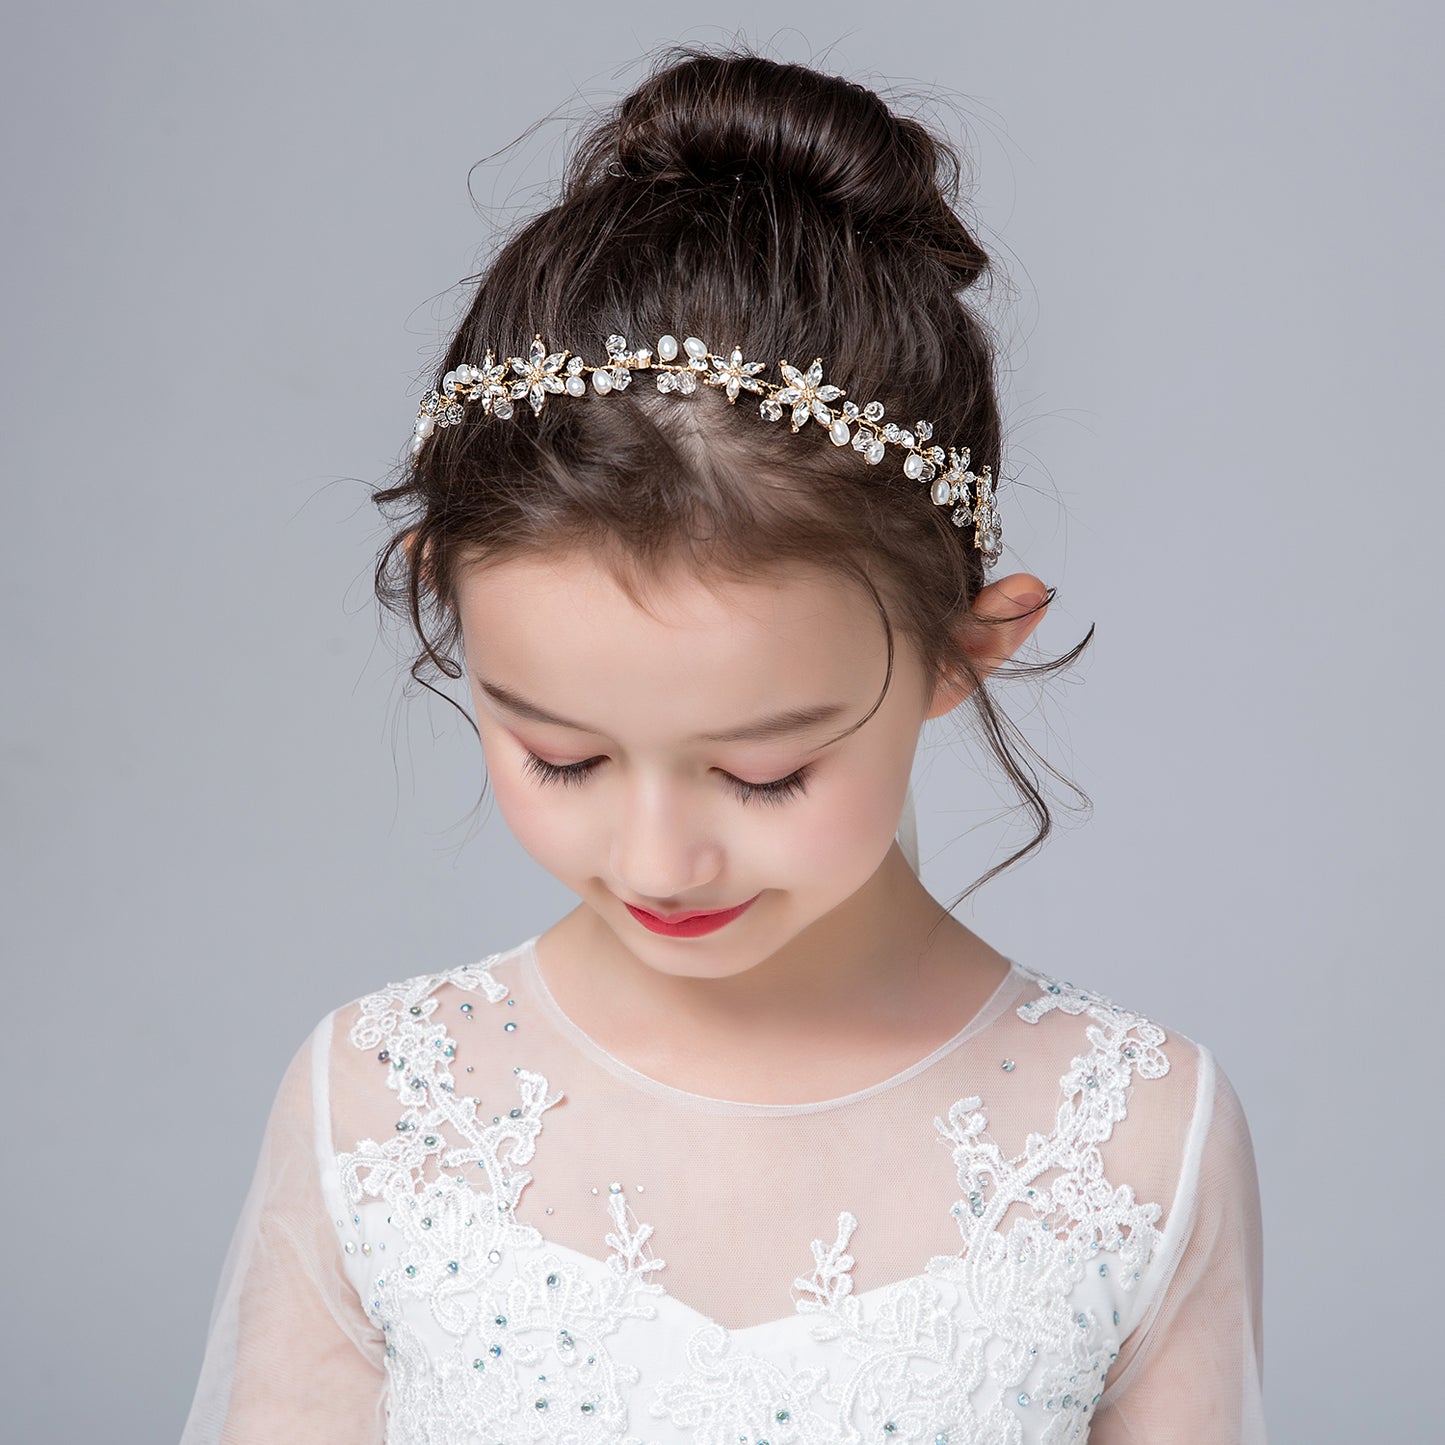 Girls Princess Hair Accessories Party Wedding Headpiece/Headbands Elegant